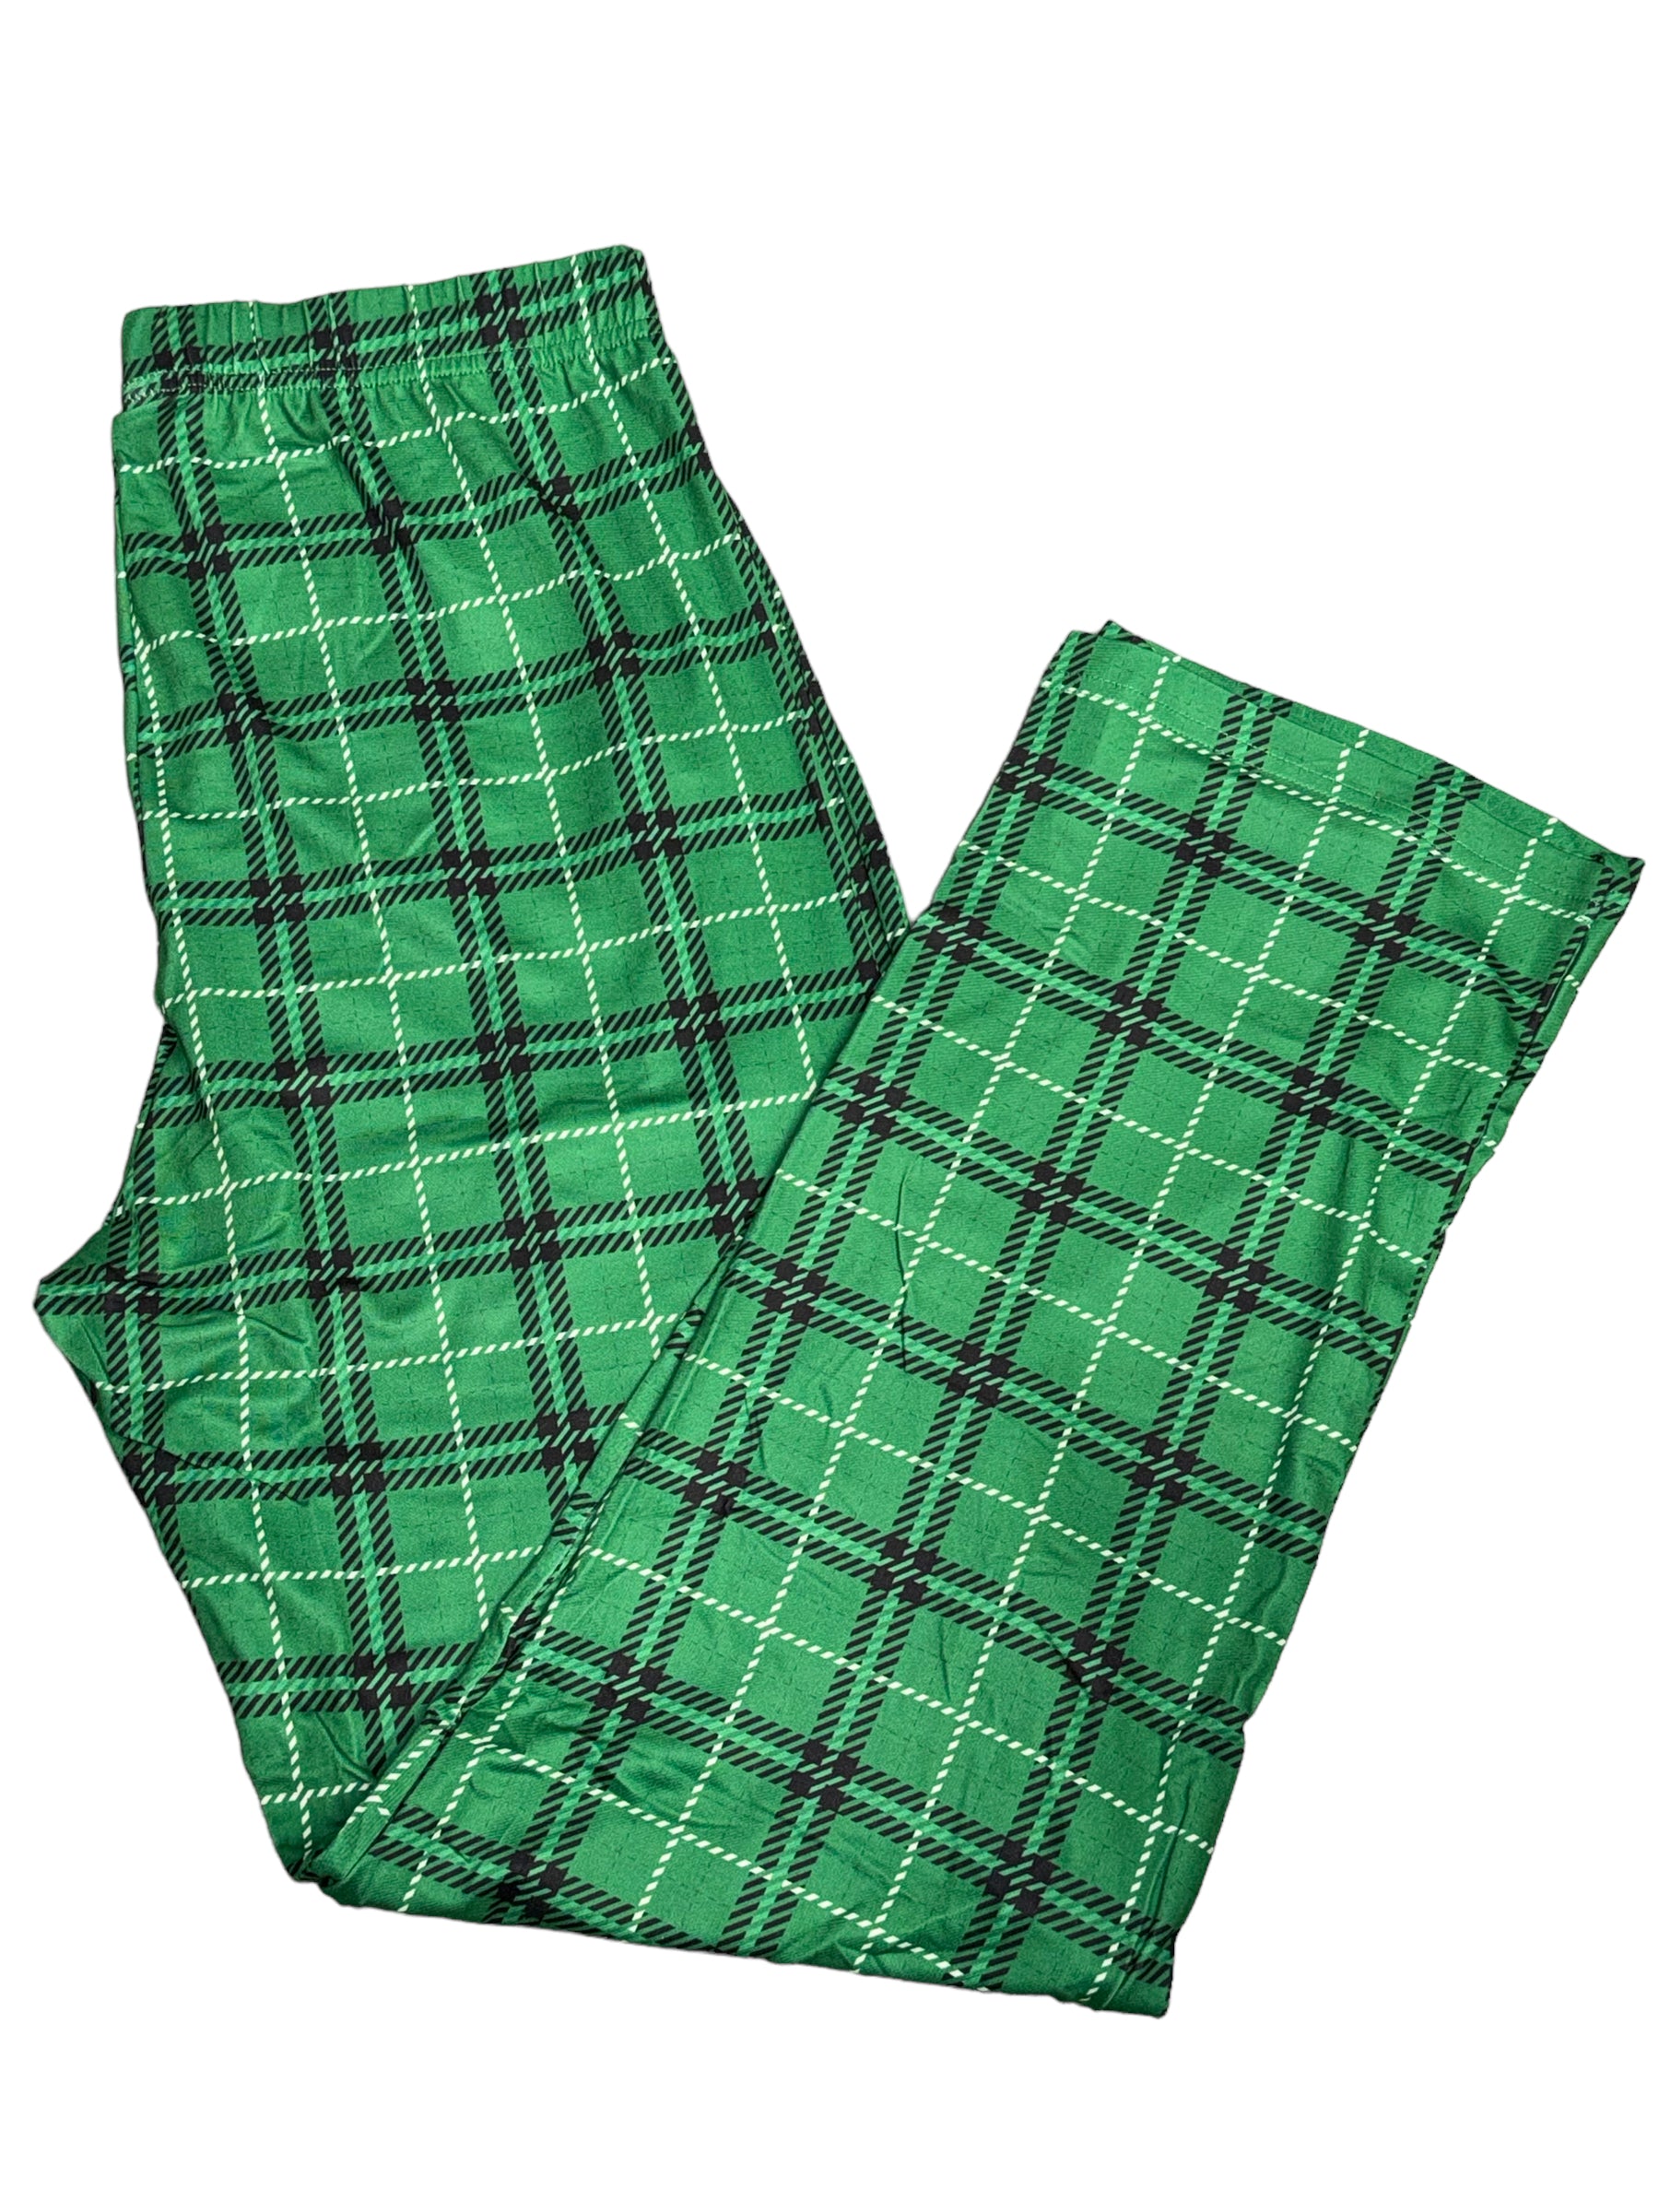 Green Plaid Pajama Pants